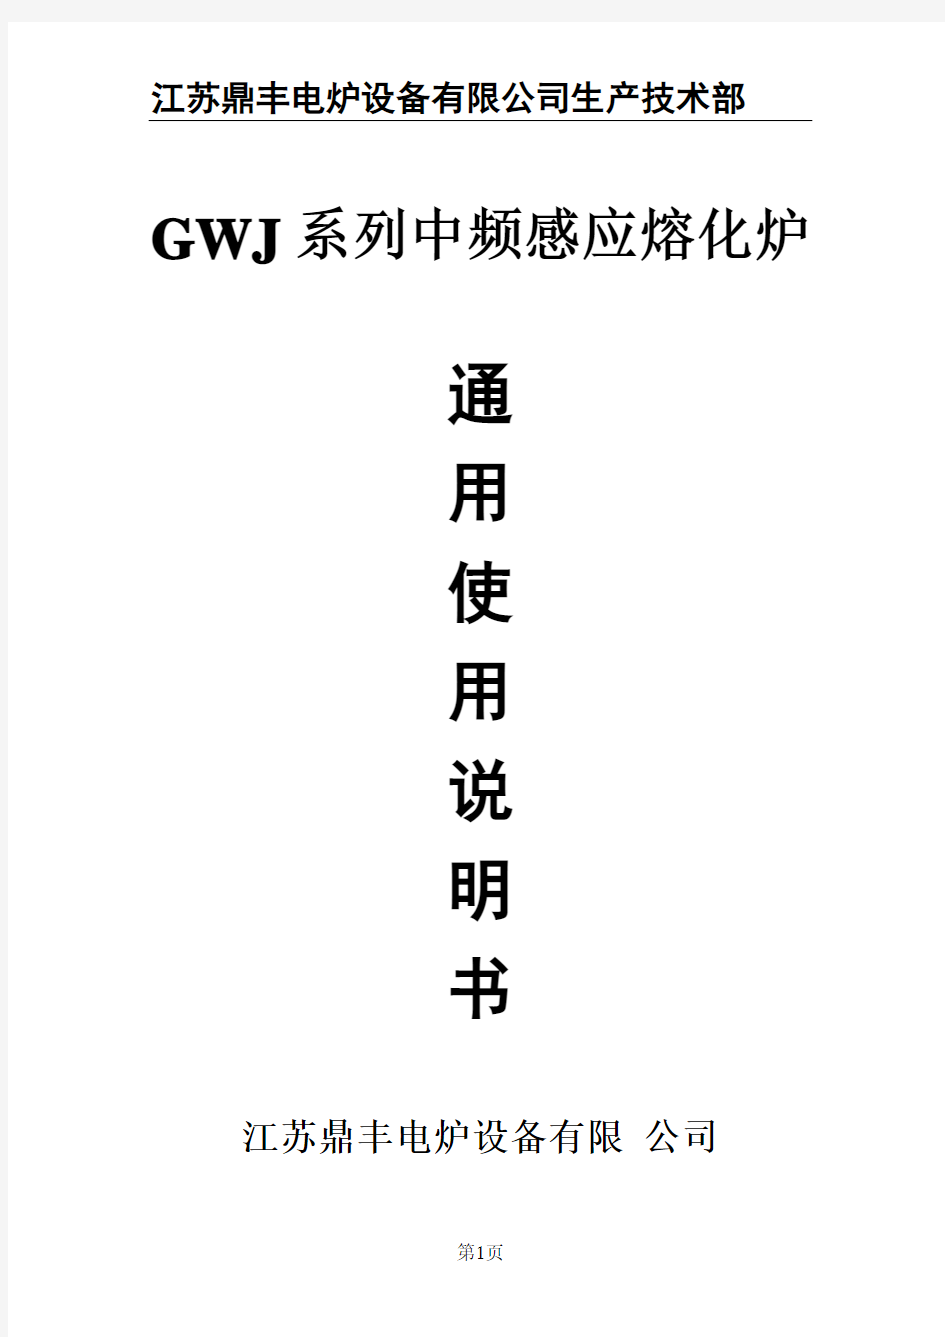 GWJ系列中频感应熔化炉使用说明书